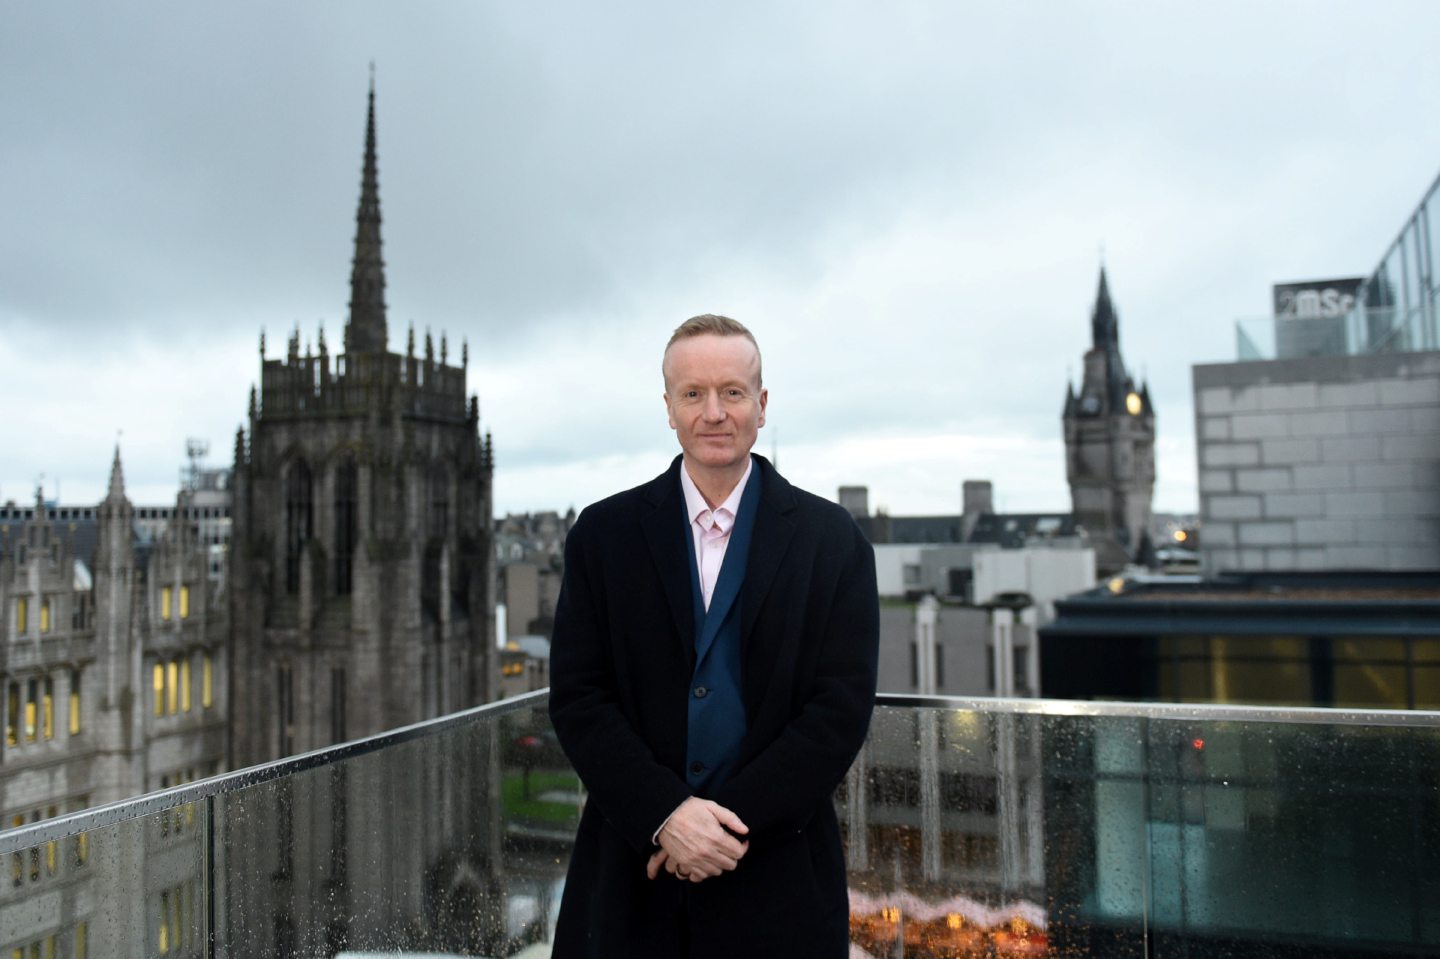 Aberdeen Inspired chief executive Adrian Watson